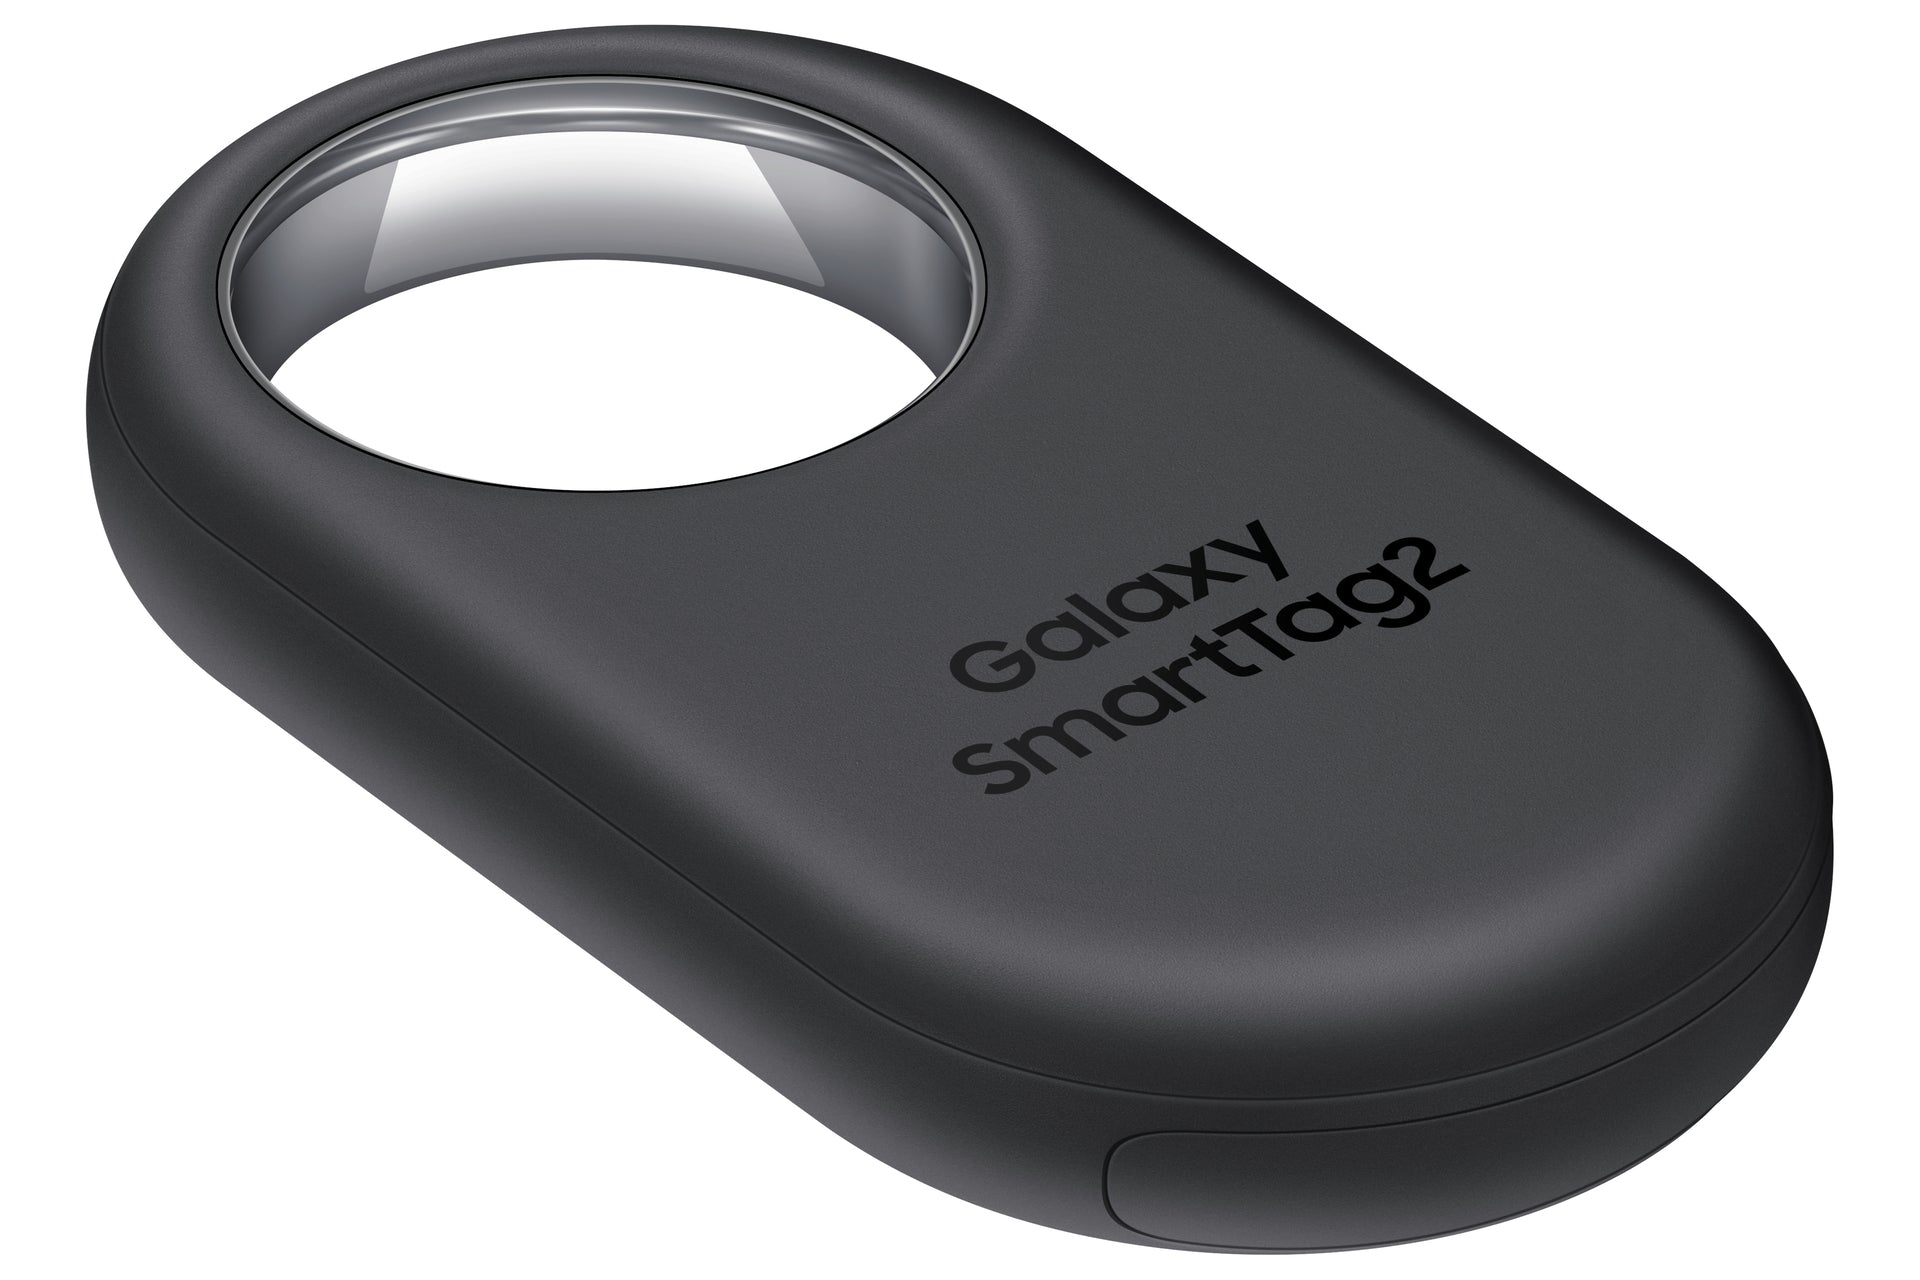 Samsung Galaxy SmartTag2 EI-T5600 Kit